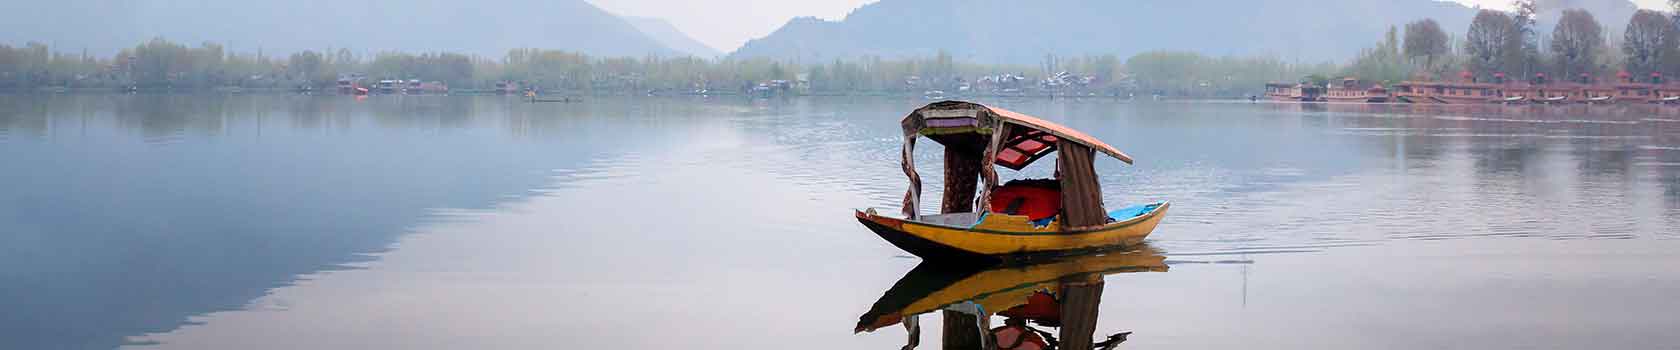 Jammu-and-Kashmir